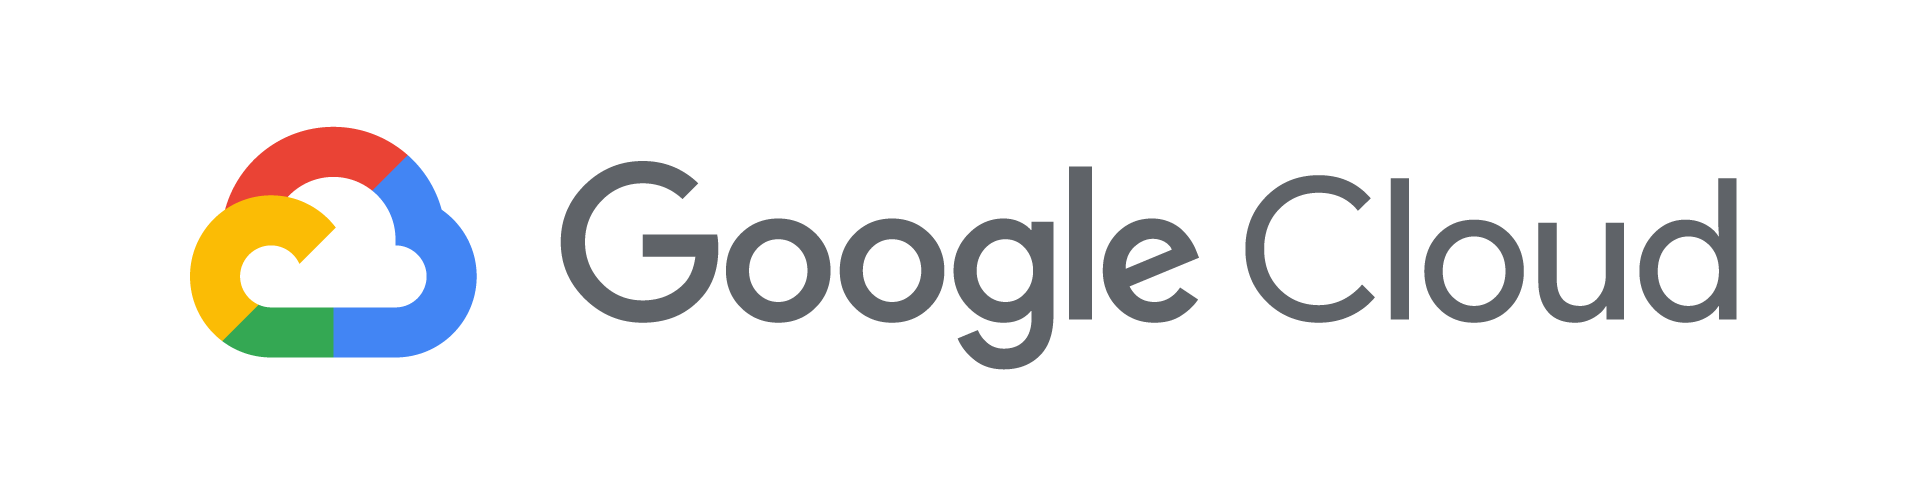 Google Cloud Logo - google-cloud-logo - Myndshft